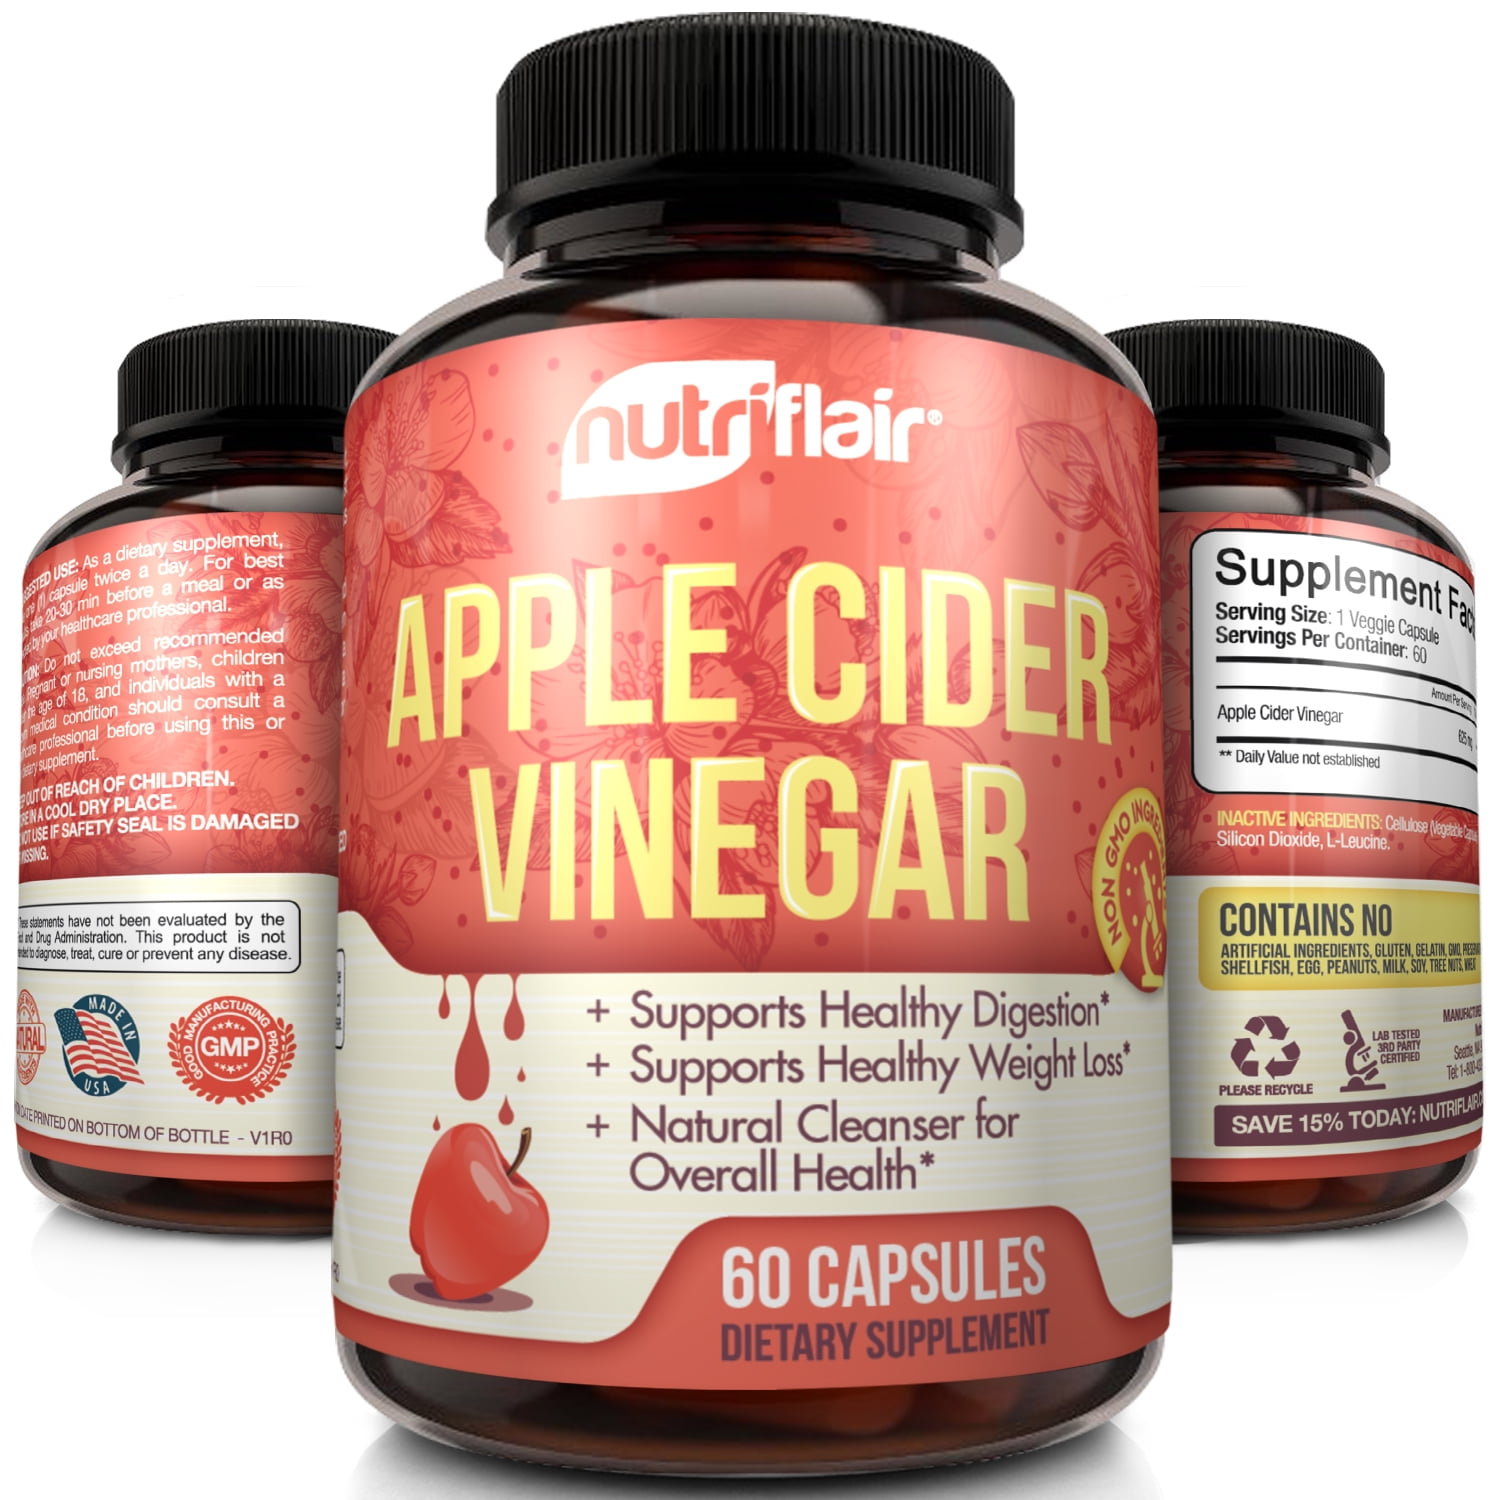 Cider vinegar tablets for weight loss